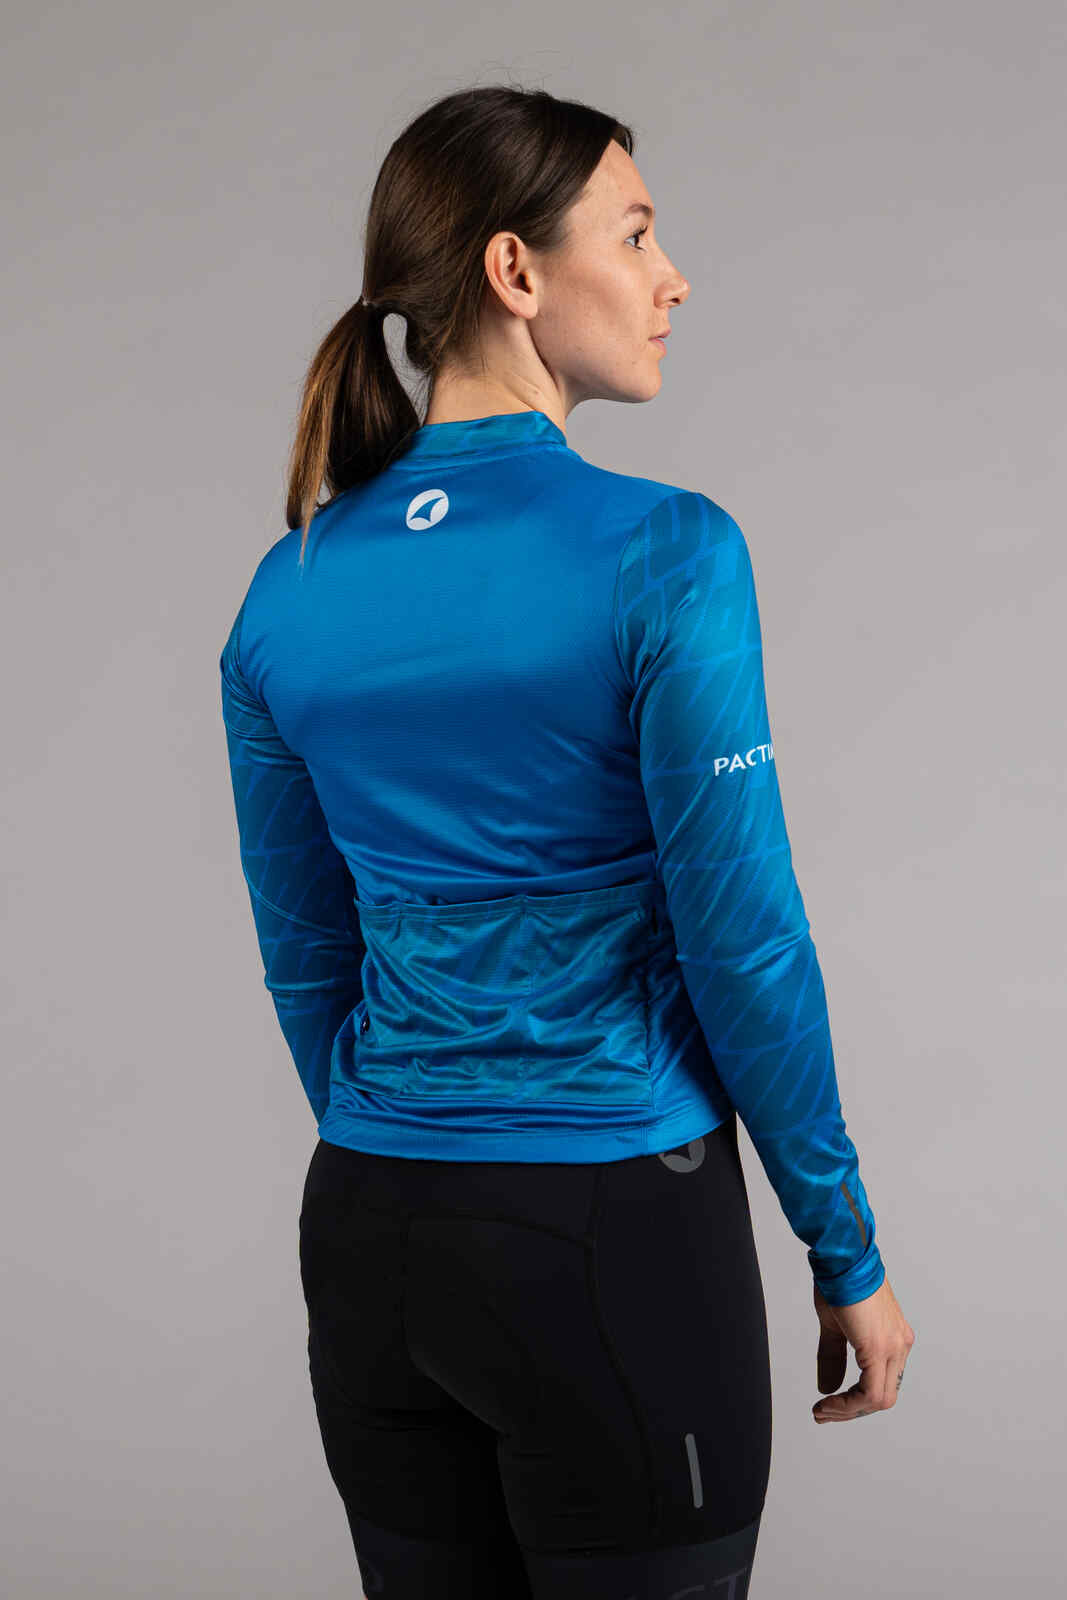 Women's Long Sleeve Blue Cycling Jersey - Back View